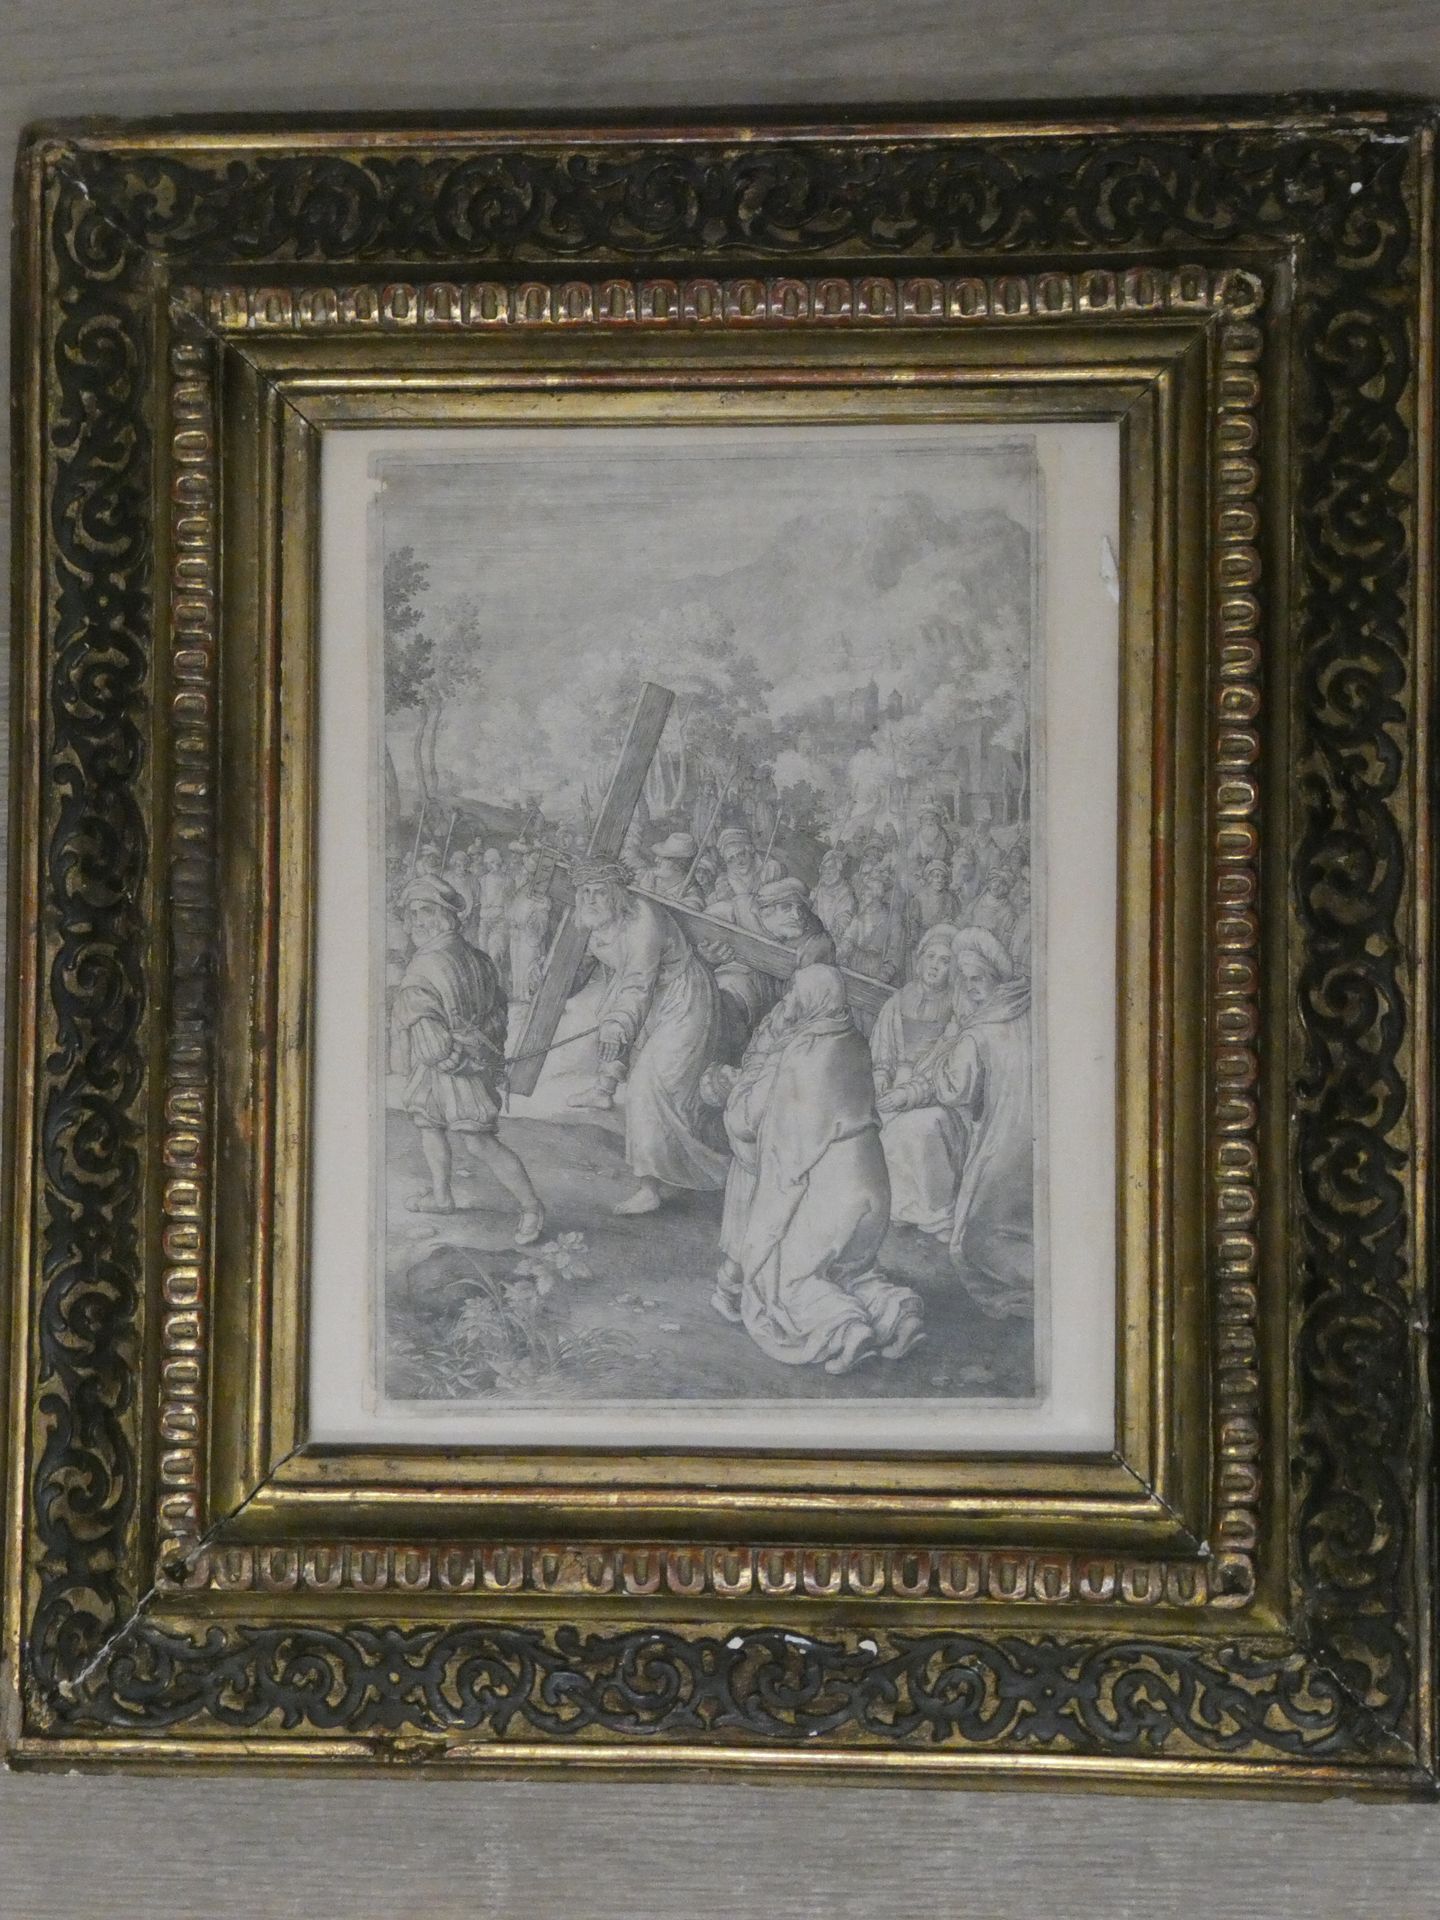 Null Nicolaes DE BRUYN(1571-1656),据。

十字架之路

蚀刻版画，中间有NB字样，日期为1618年。

20x14cm (边角&hellip;